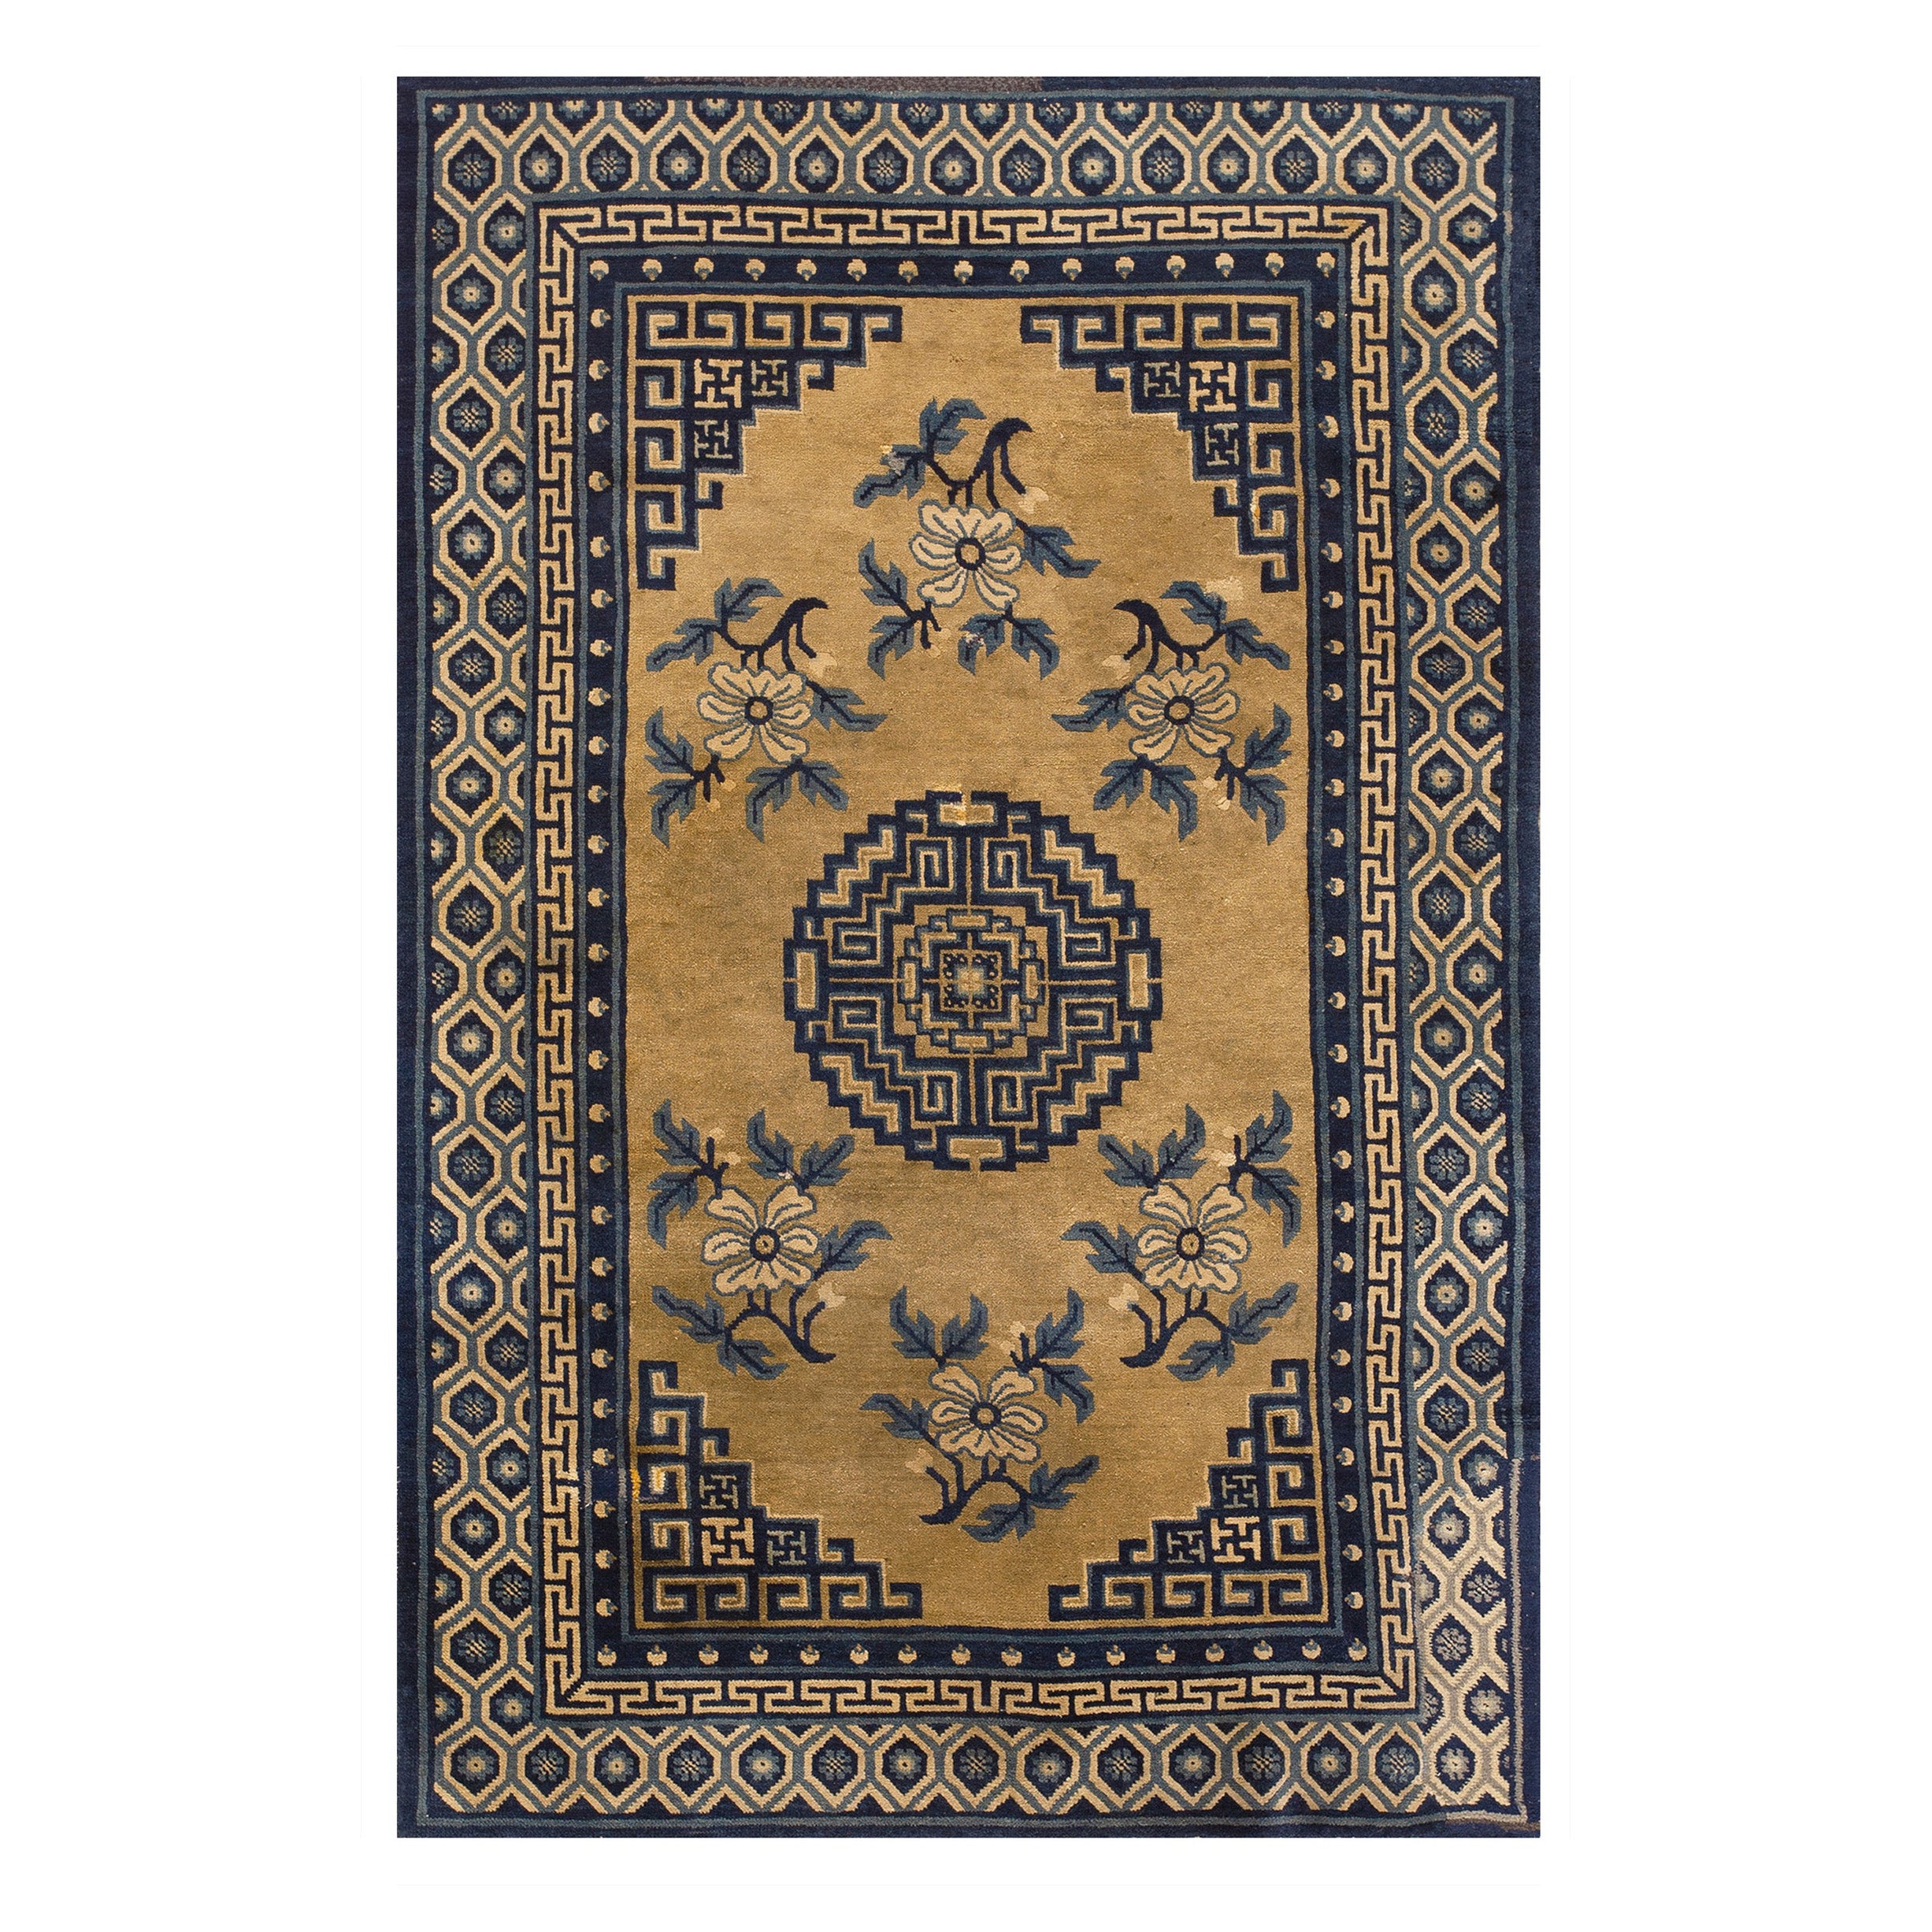 Early 20th Century N. Chinese Baotou Carpet ( 4' x 6'2'' - 122 x 188 )